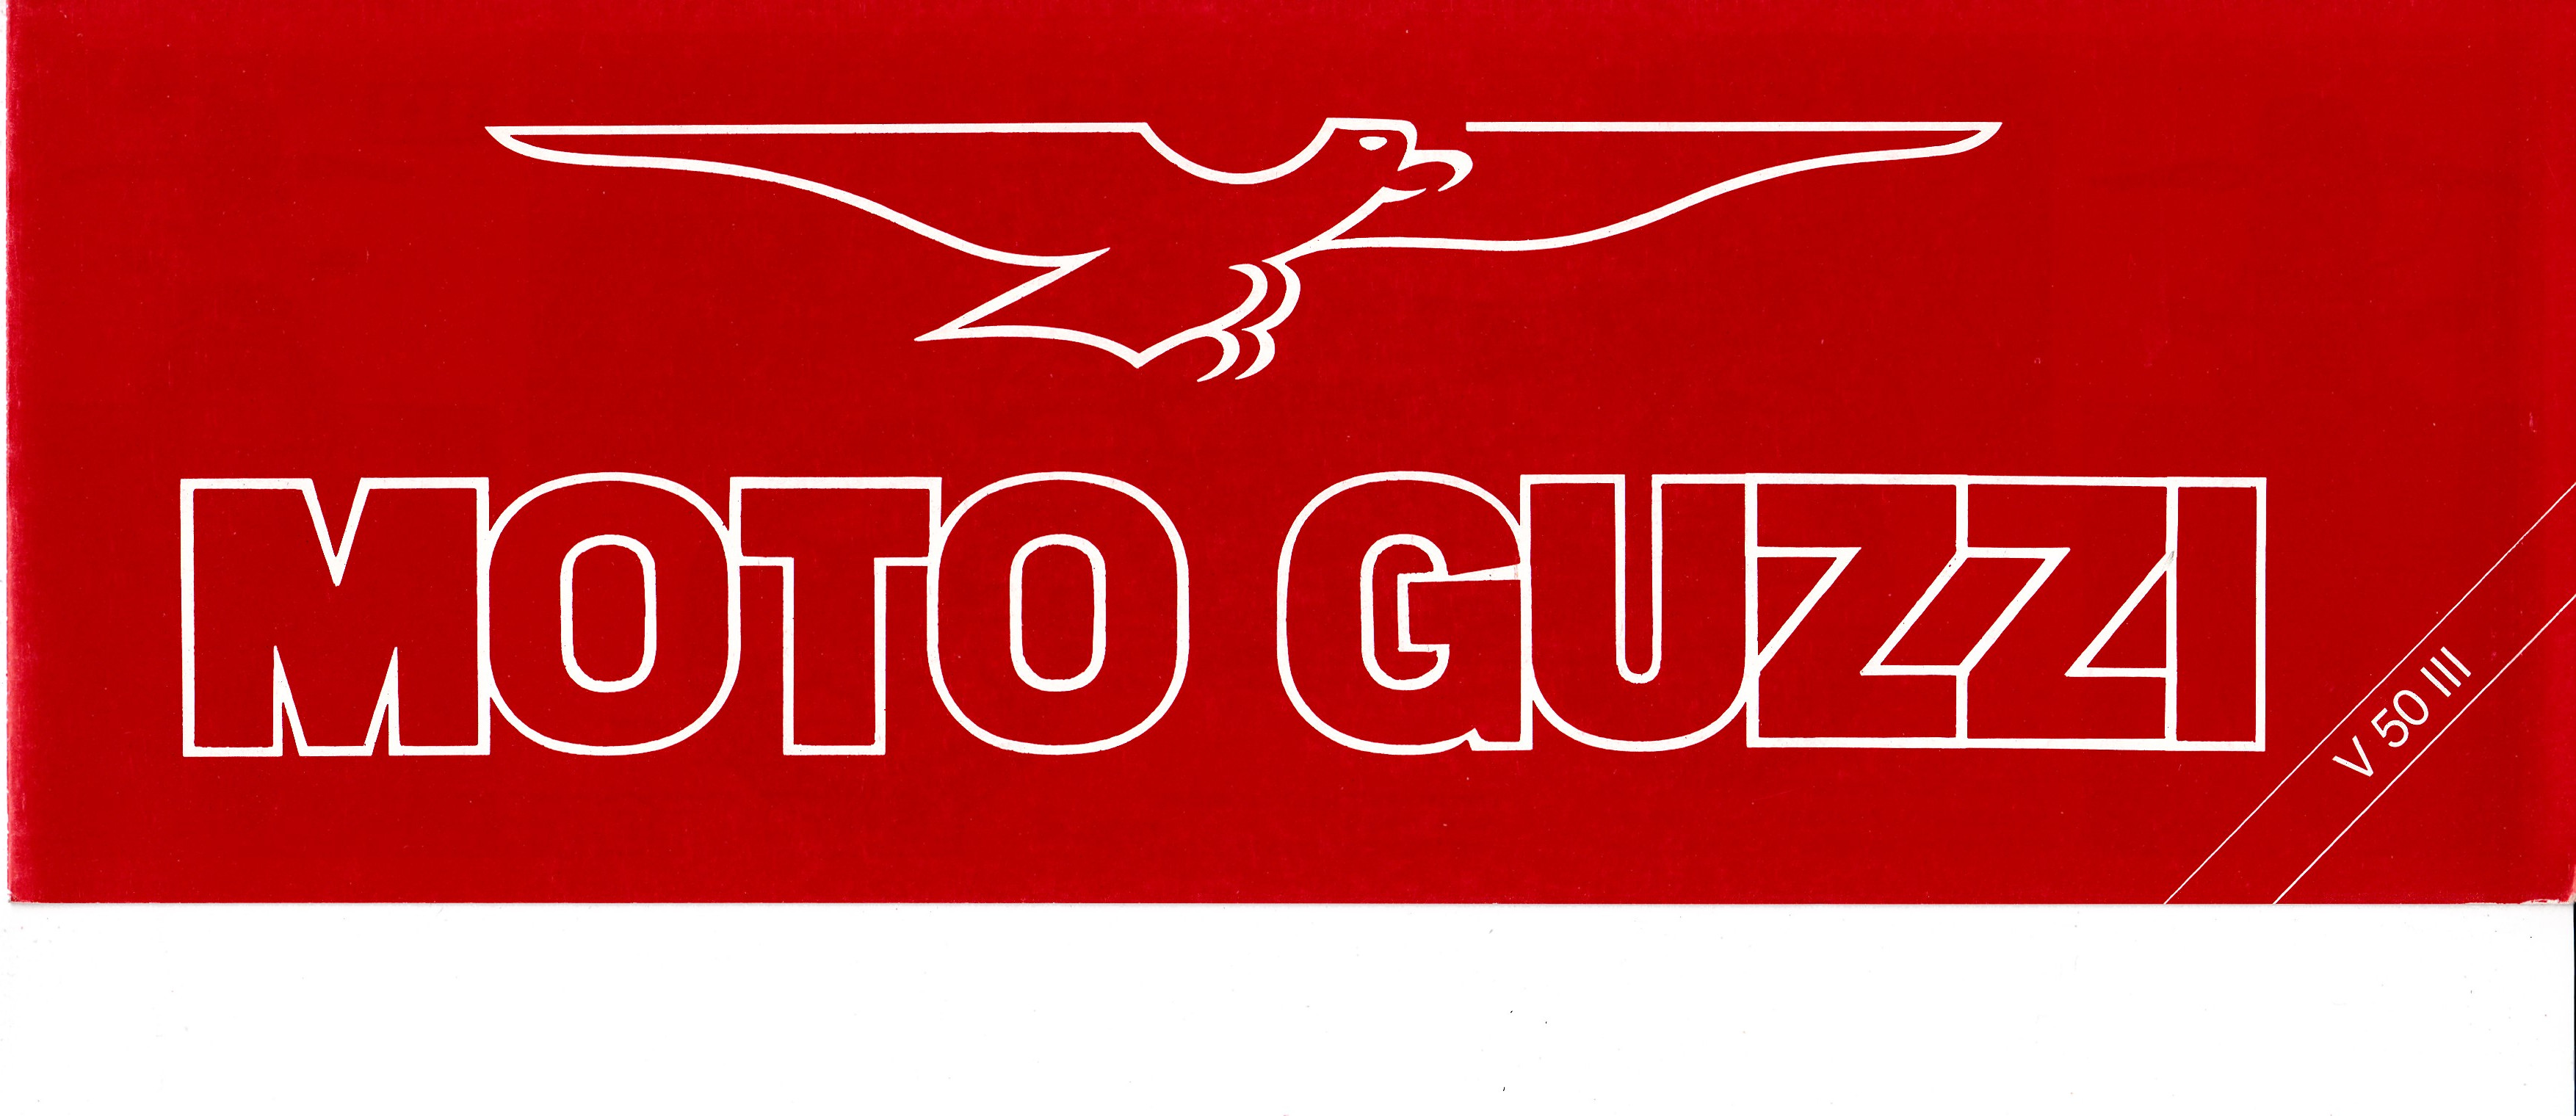 Brochure - Moto Guzzi V50 III (folded style brochure)